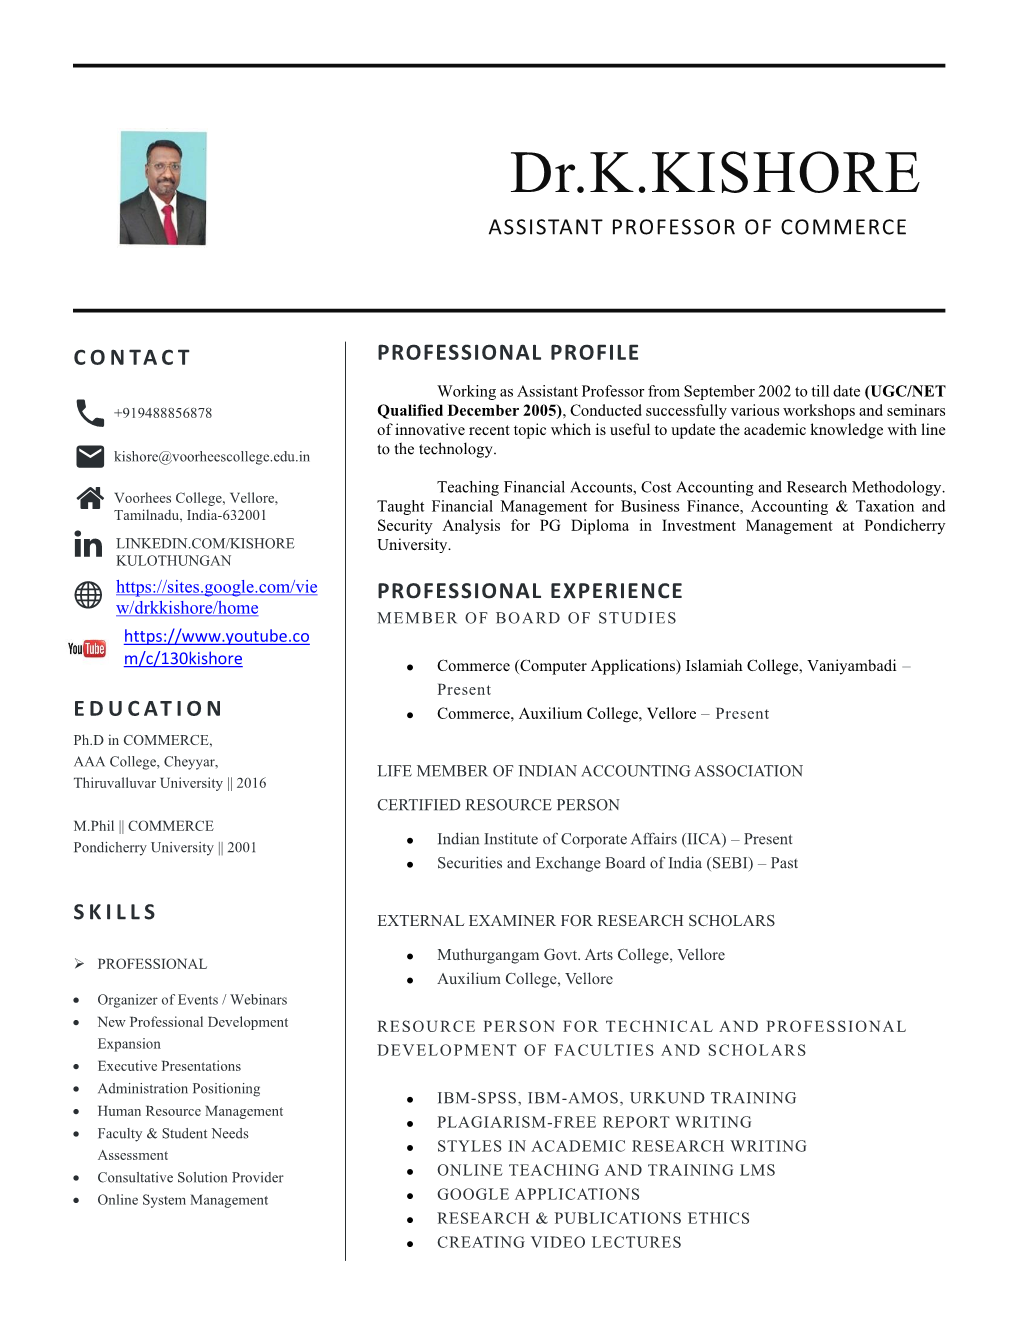 Dr.K.KISHORE ASSISTANT PROFESSOR of COMMERCE